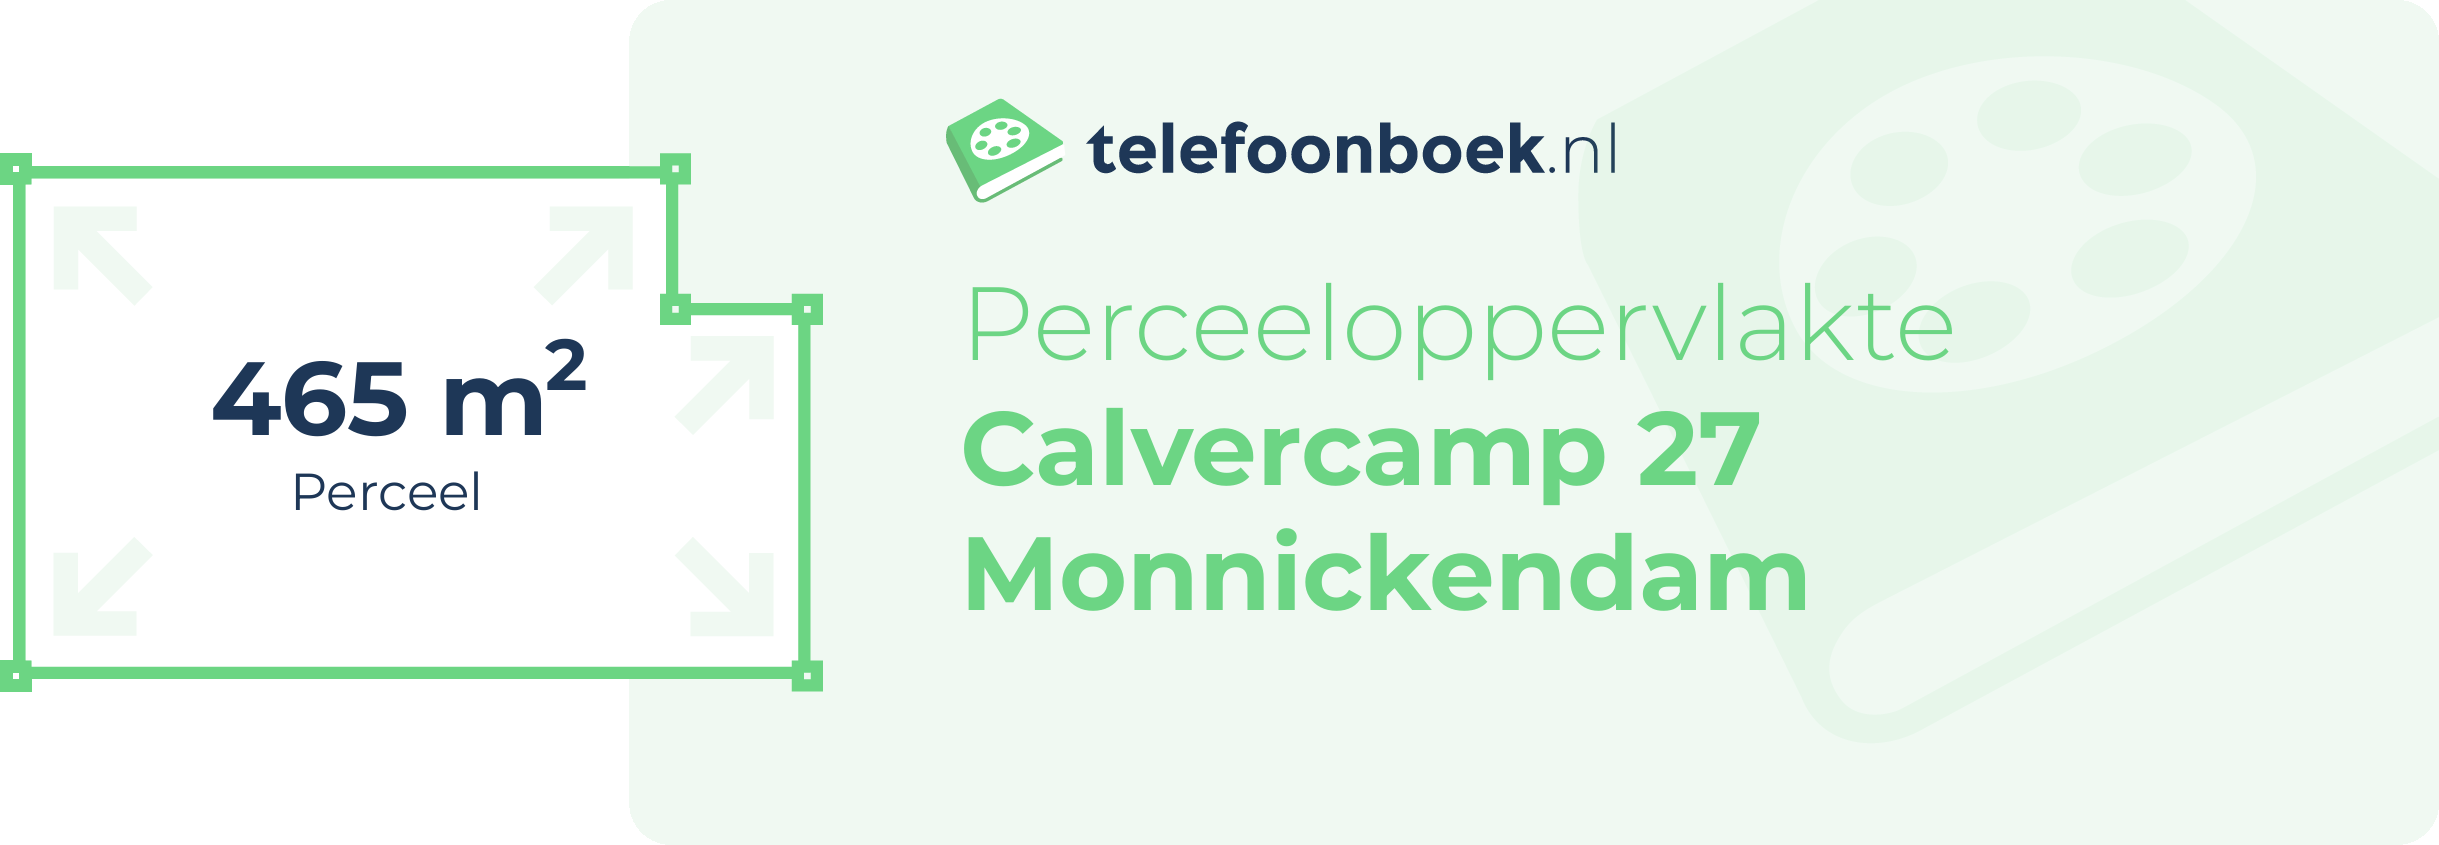 Perceeloppervlakte Calvercamp 27 Monnickendam